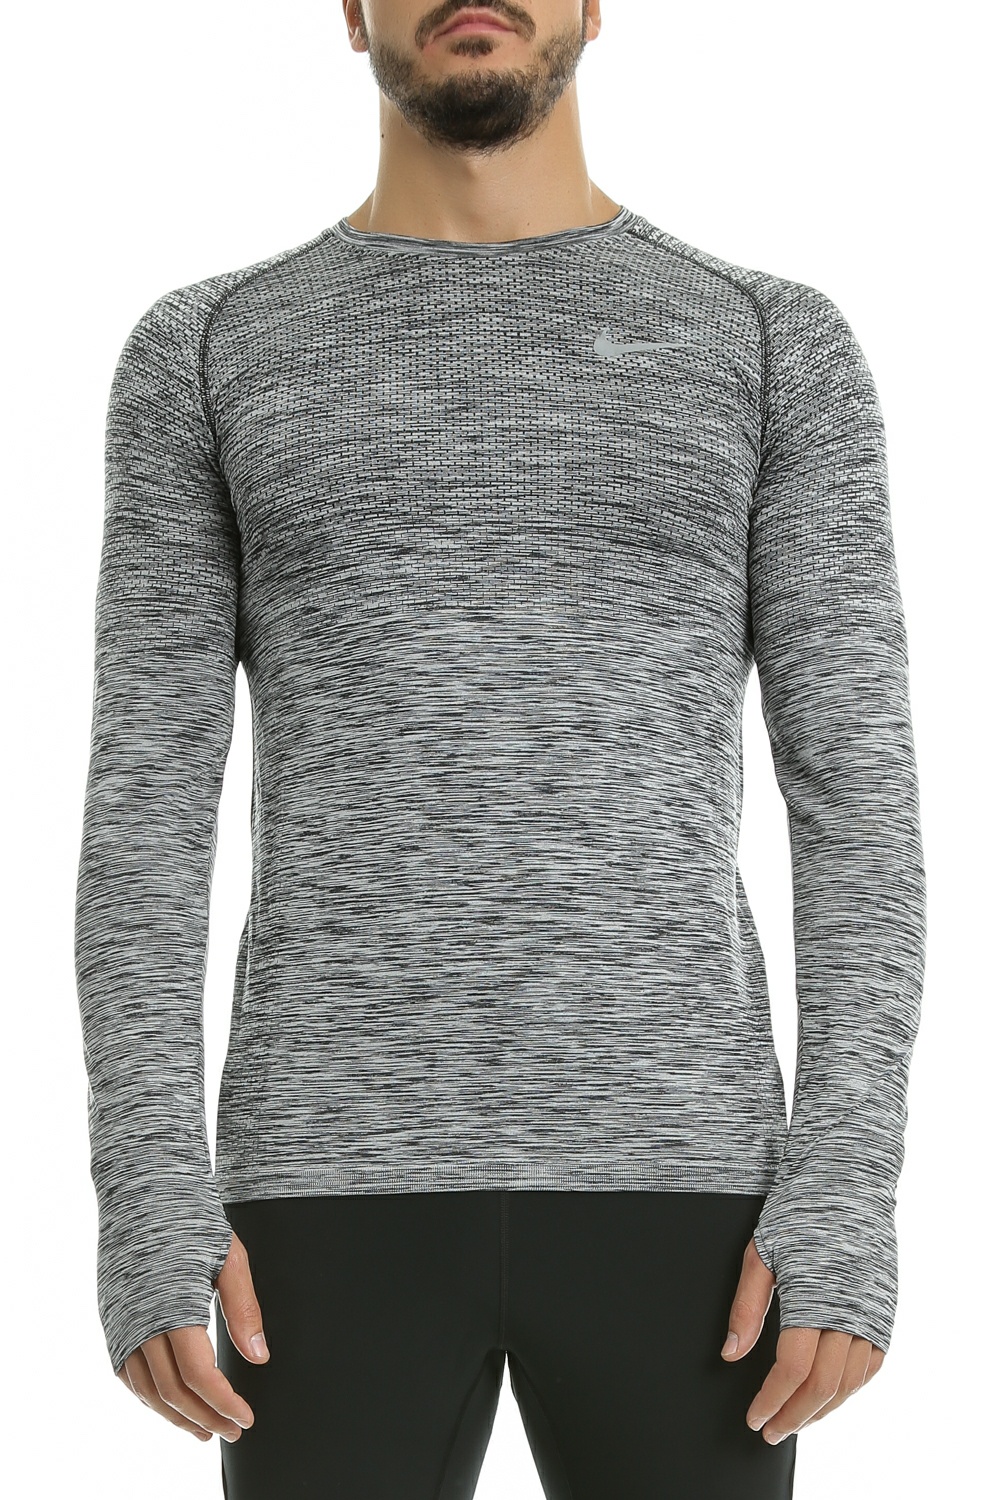 NIKE - Αθλητική μακρυμάνικη μπλούζα Nike γκρι Ανδρικά/Ρούχα/Αθλητικά/Φούτερ-Μακρυμάνικα